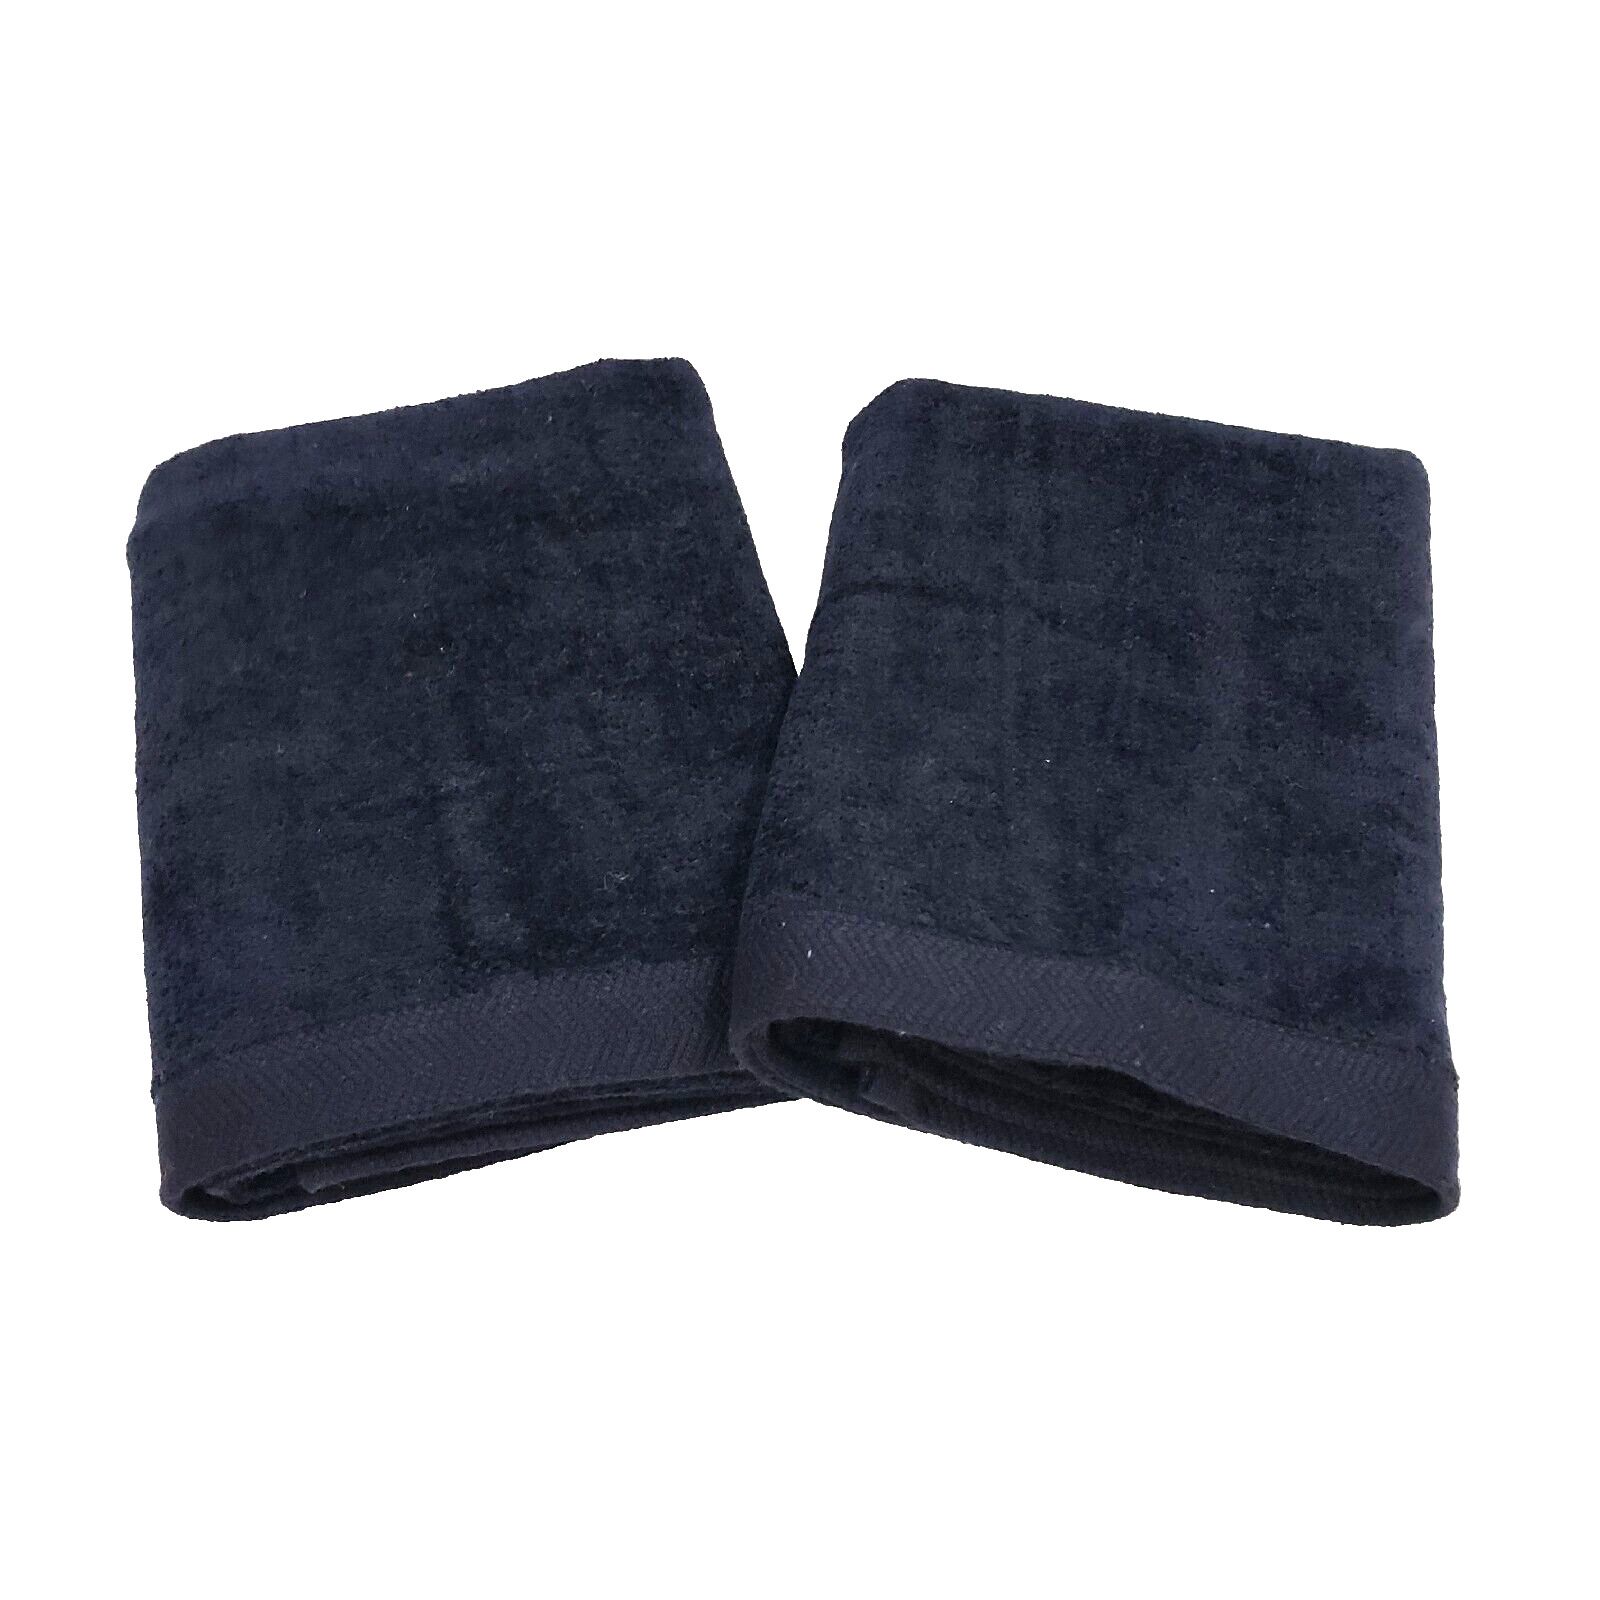 Bath Hand Towels Black Cotton Set of 2 Unbranded New